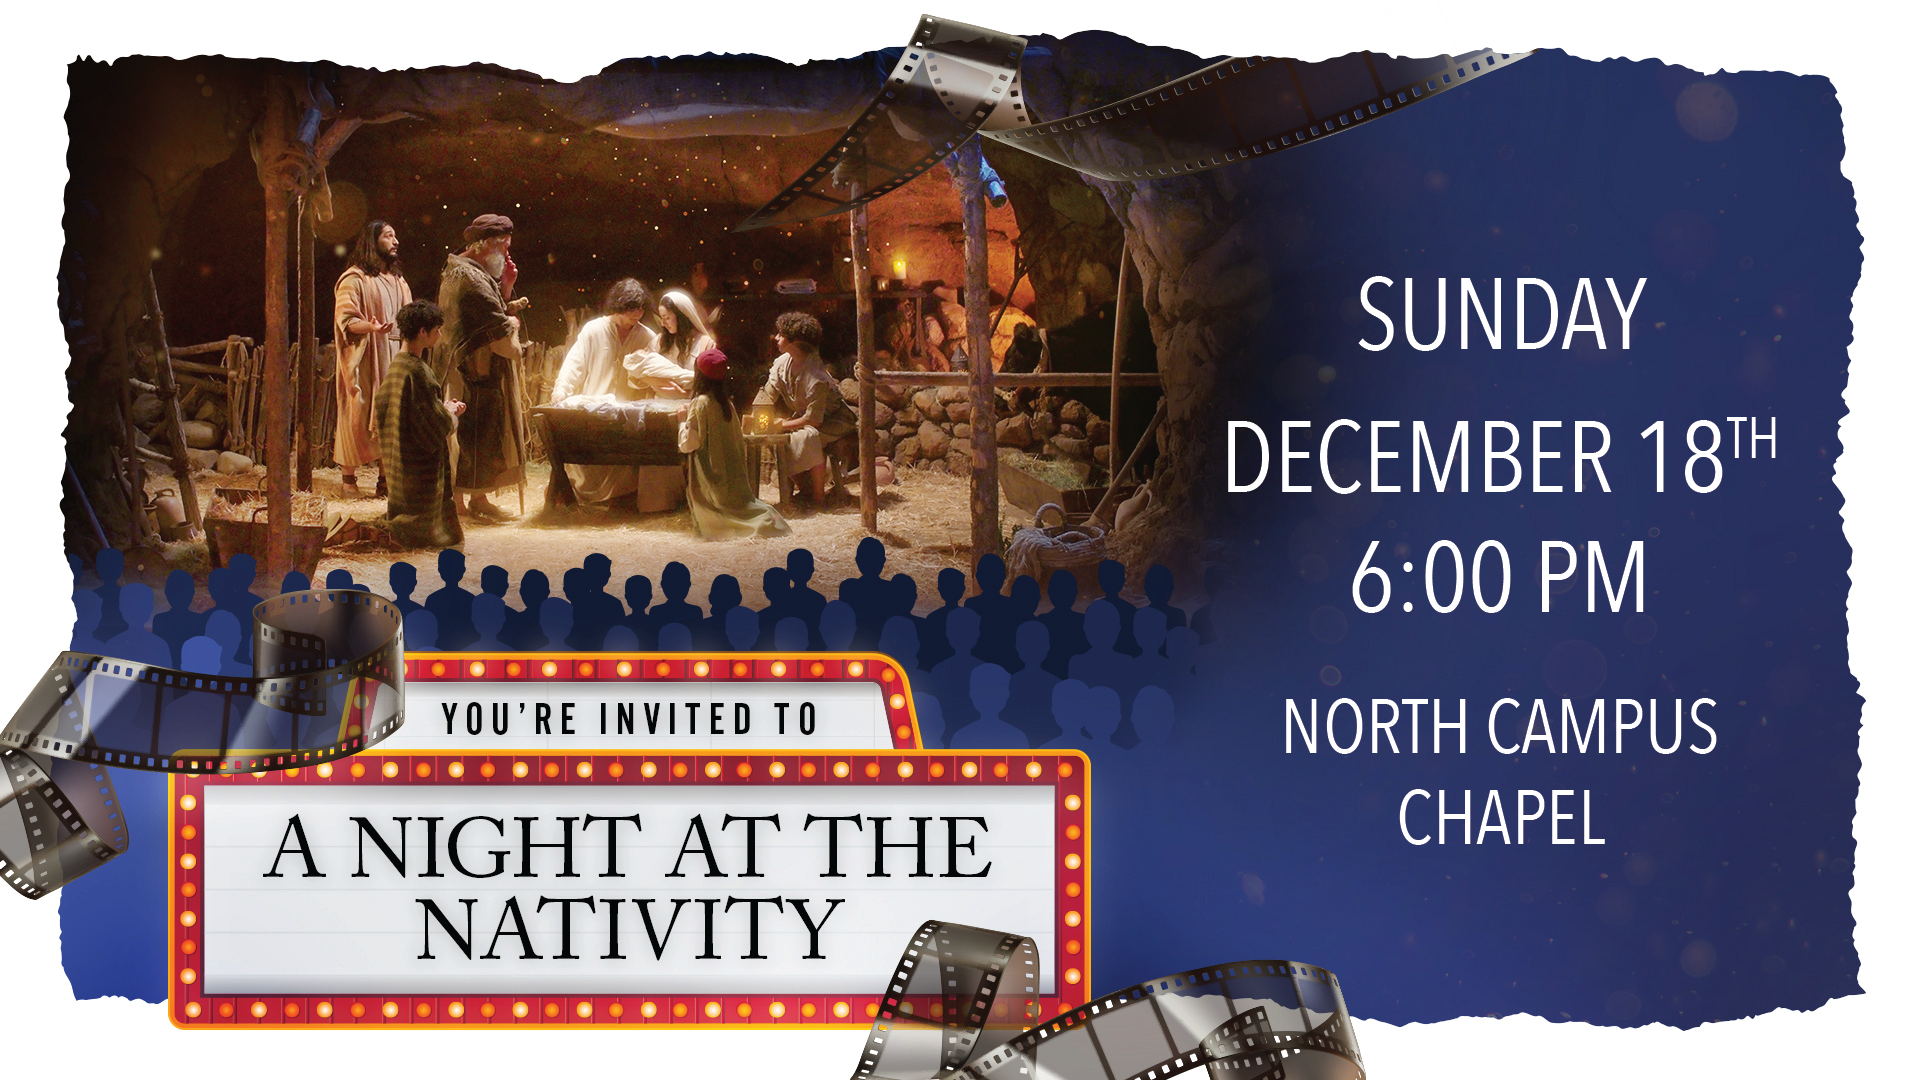 A Night at the Nativity